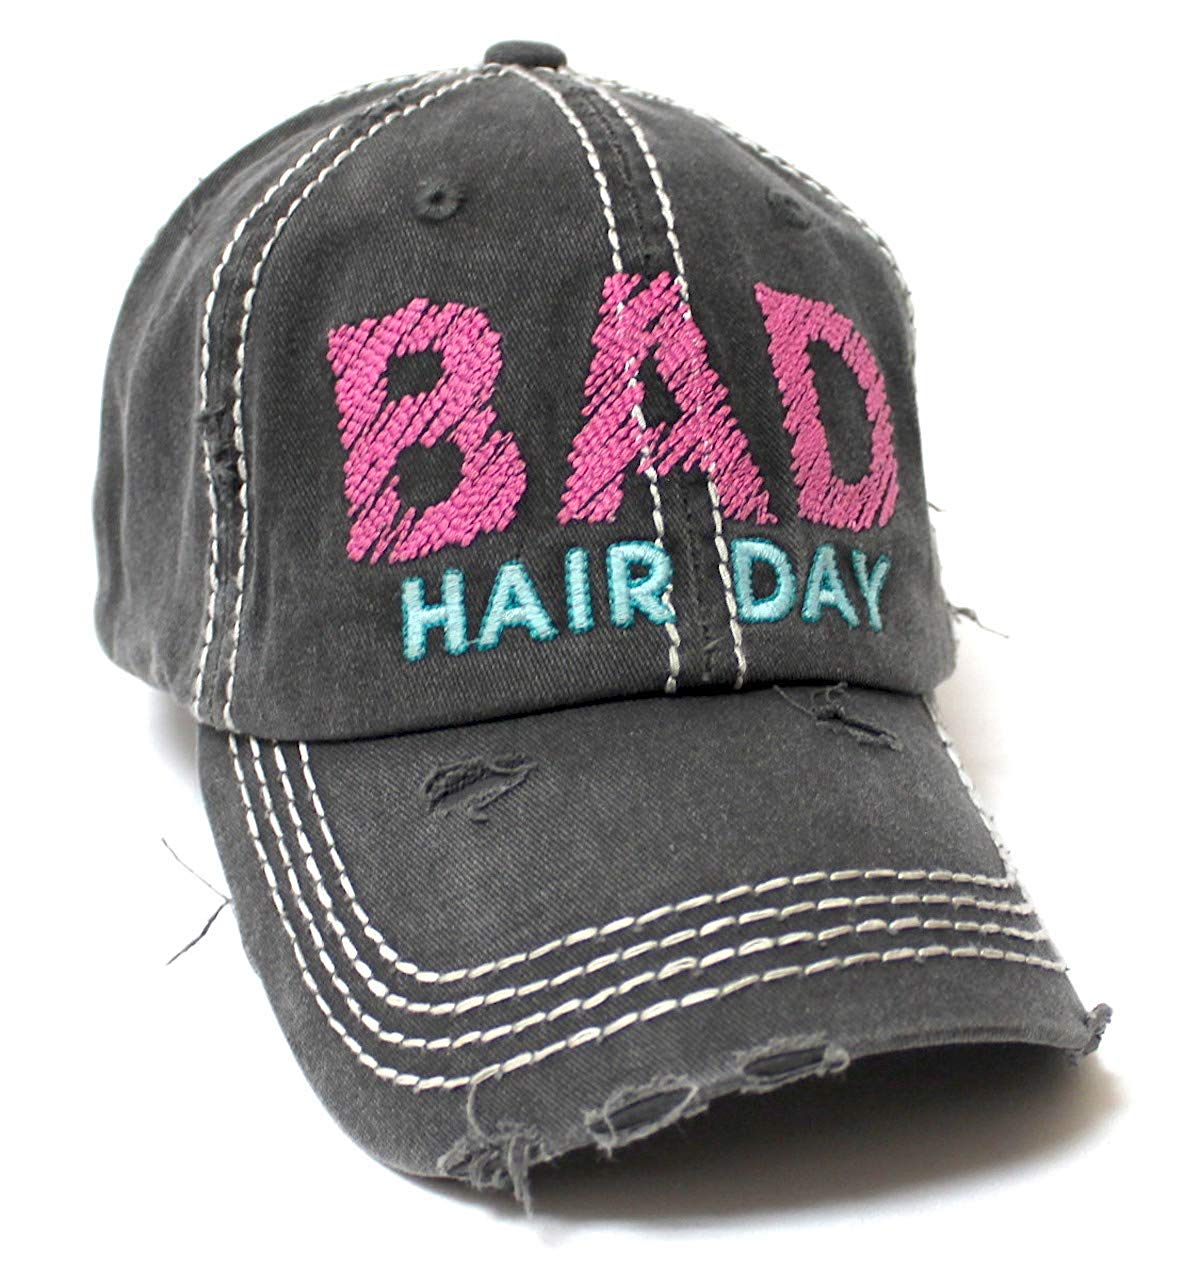 CAPS 'N VINTAGE Bad Hair Day Stitch Embroidery Distressed Baseball Hat, Charcoal Black - Caps 'N Vintage 